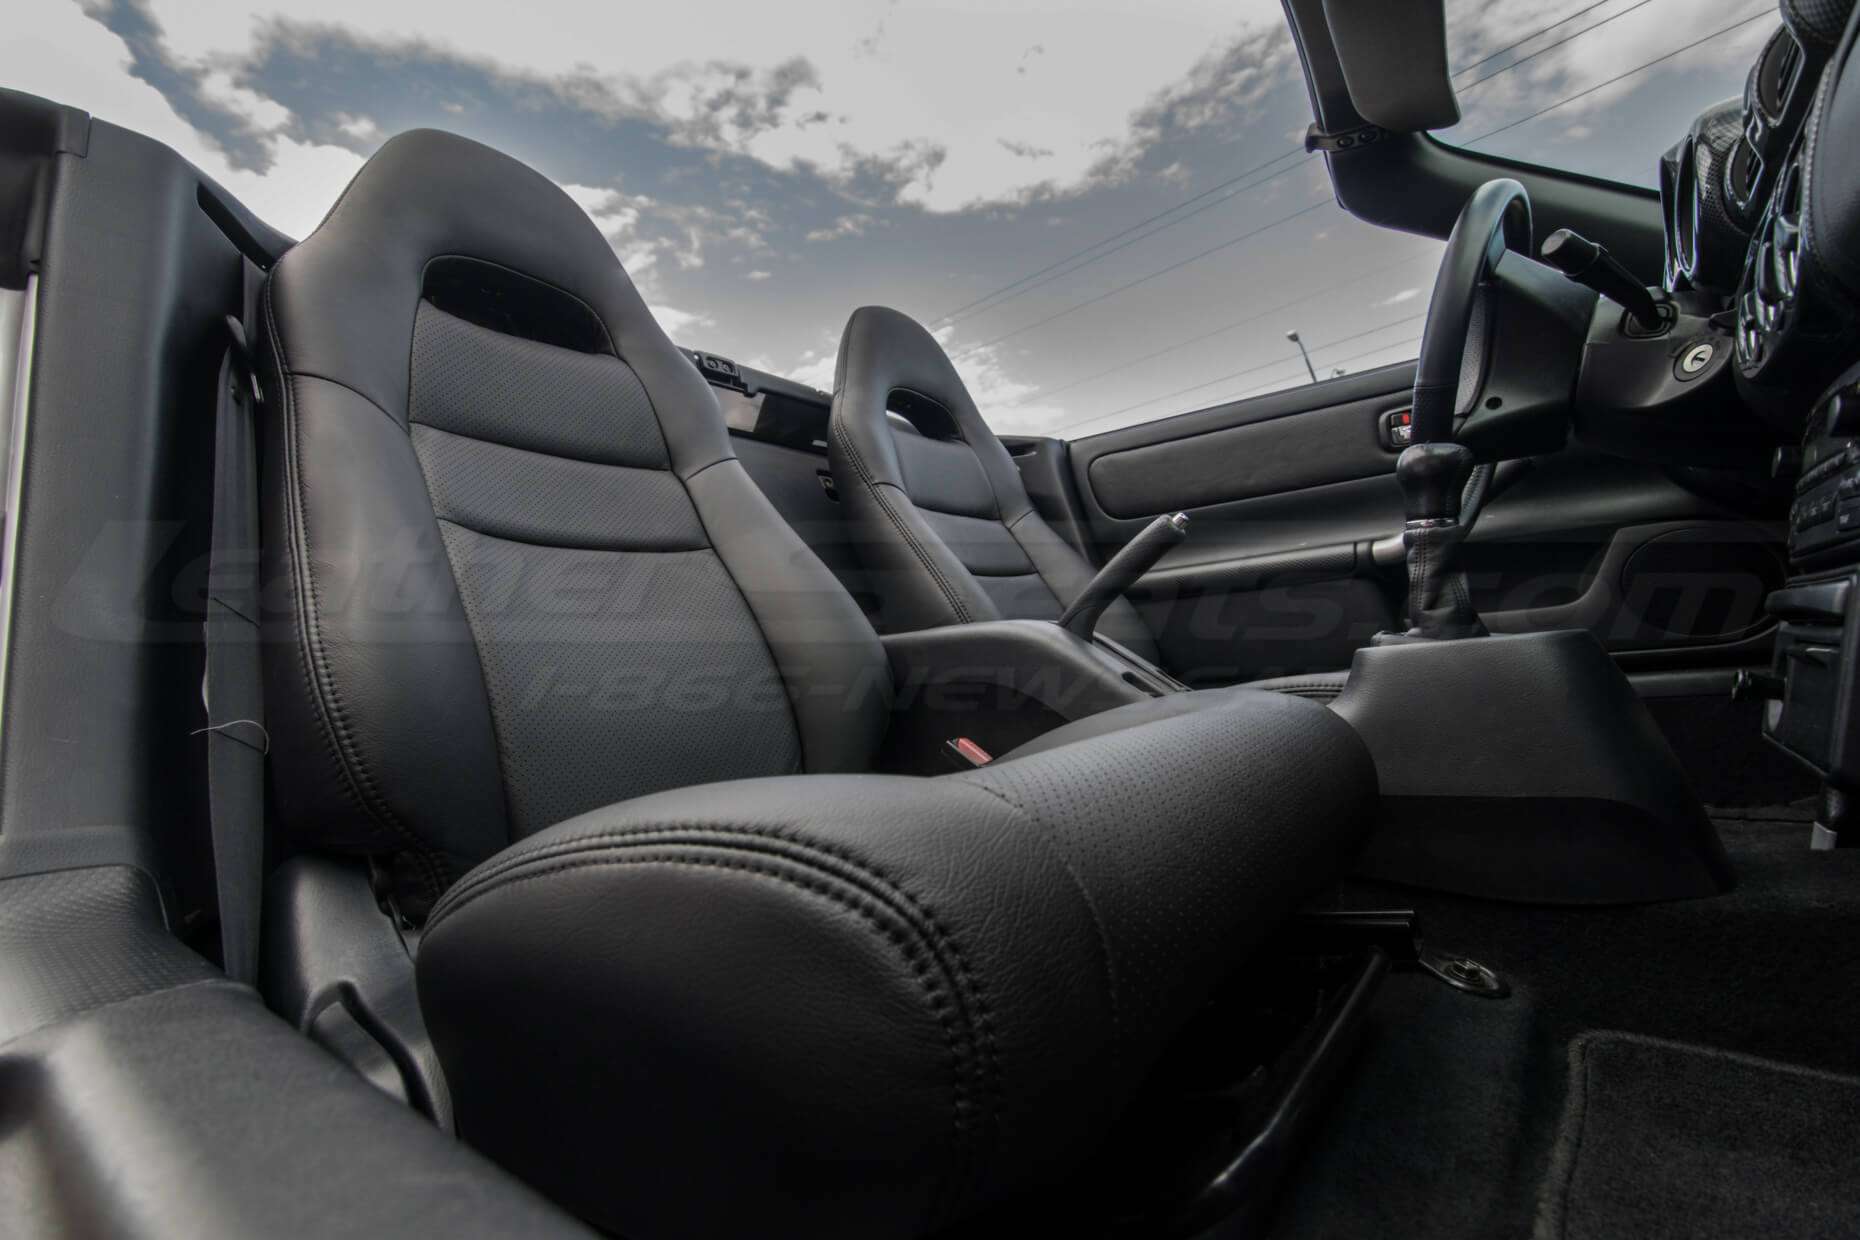 2018-2020 Toyota MR-2 Leather Seats - Black - Passenger seat cushion double-stitching